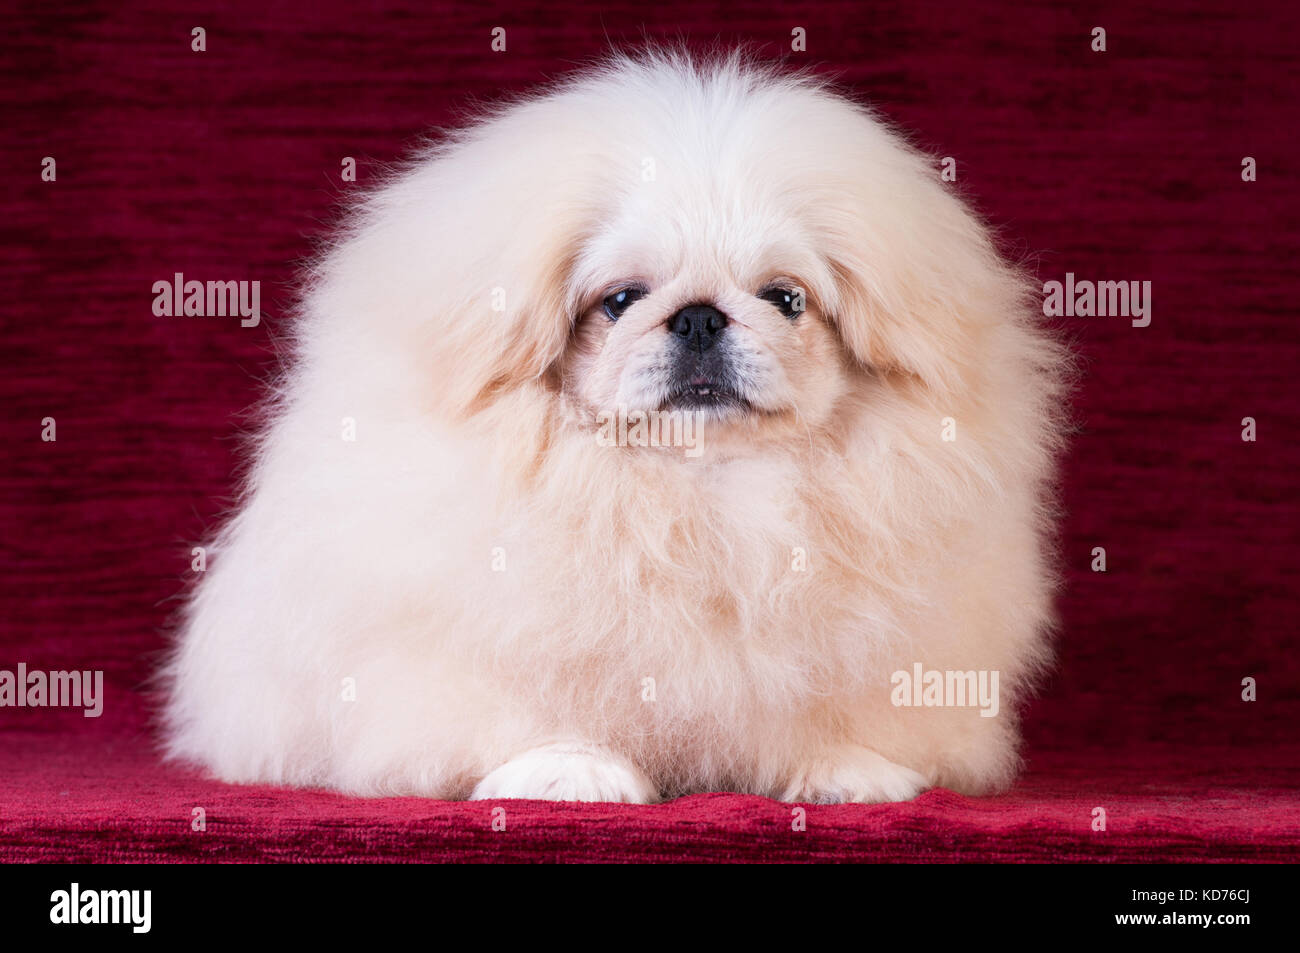 White pekingese puppy portrait at studio on red velvet background Stock Photo